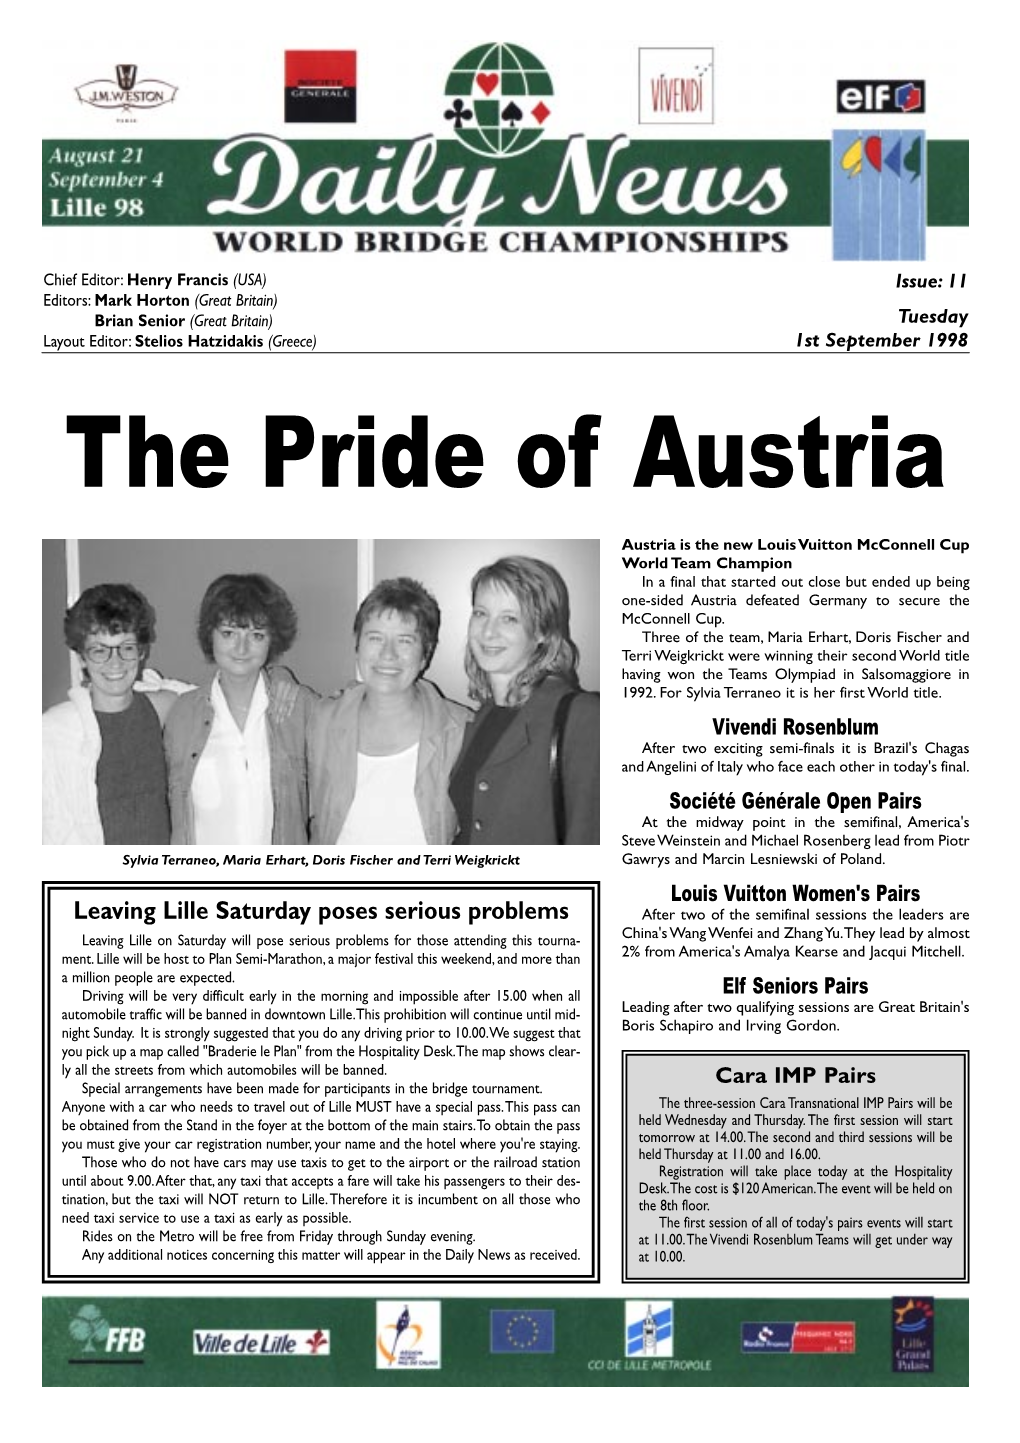 The Pride of Austria